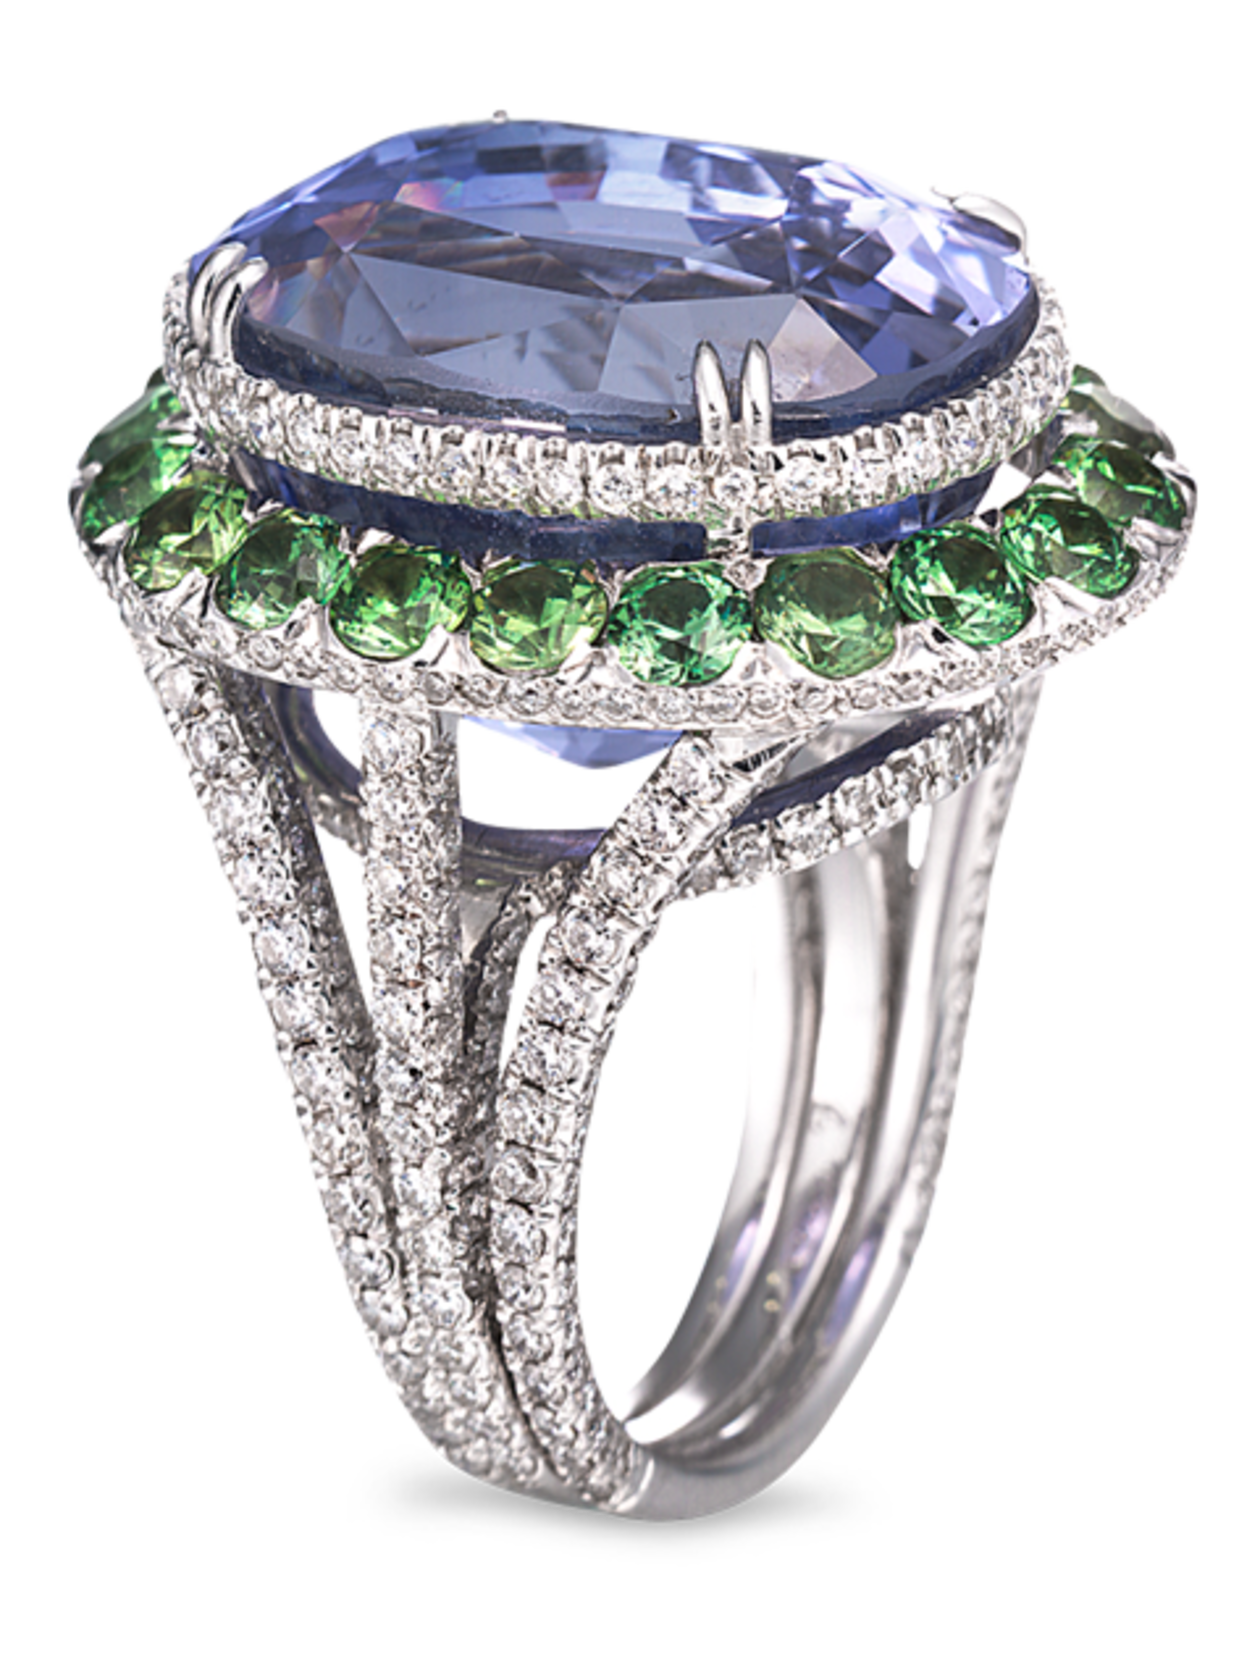 blue sapphire, demantoid garnet, and diamond ring